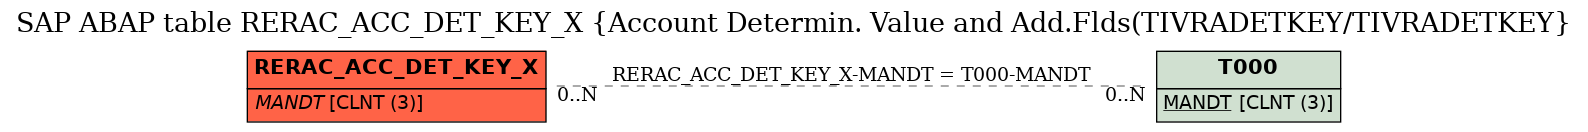 E-R Diagram for table RERAC_ACC_DET_KEY_X (Account Determin. Value and Add.Flds(TIVRADETKEY/TIVRADETKEY)